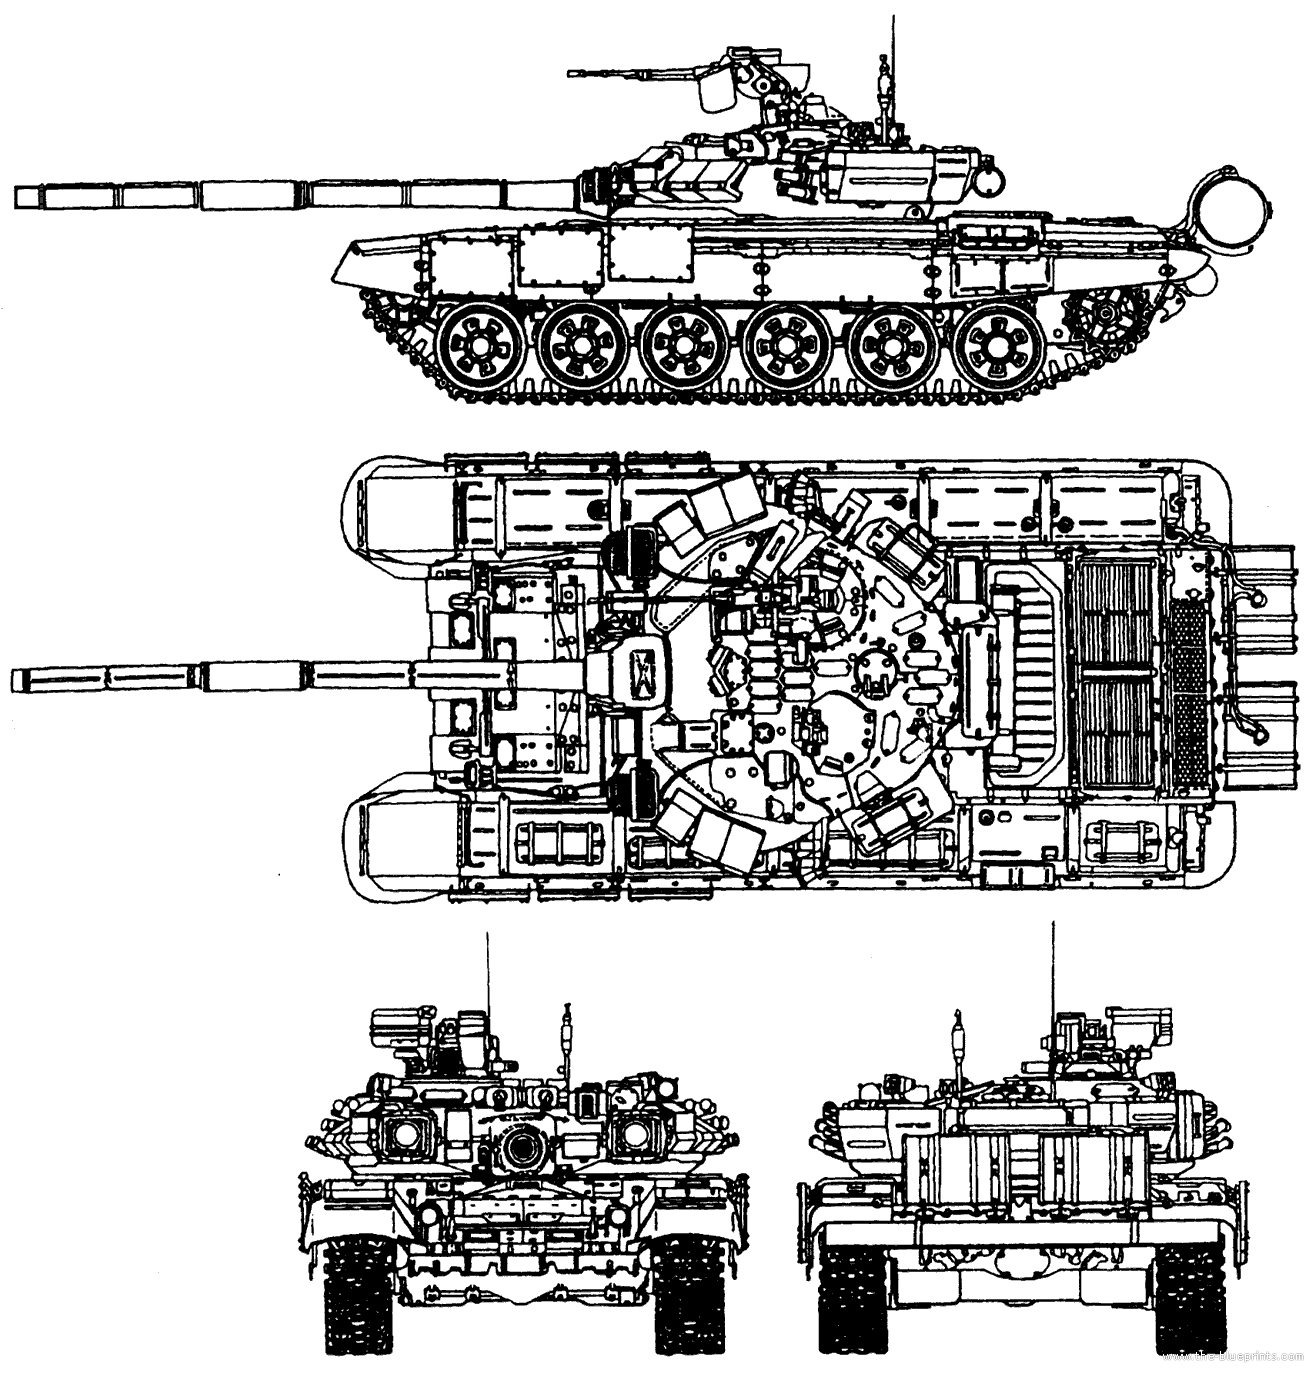 http://www.the-blueprints.com/blueprints-depot/tanks/russiantanks/russian-main-battle-tank-t-90.png